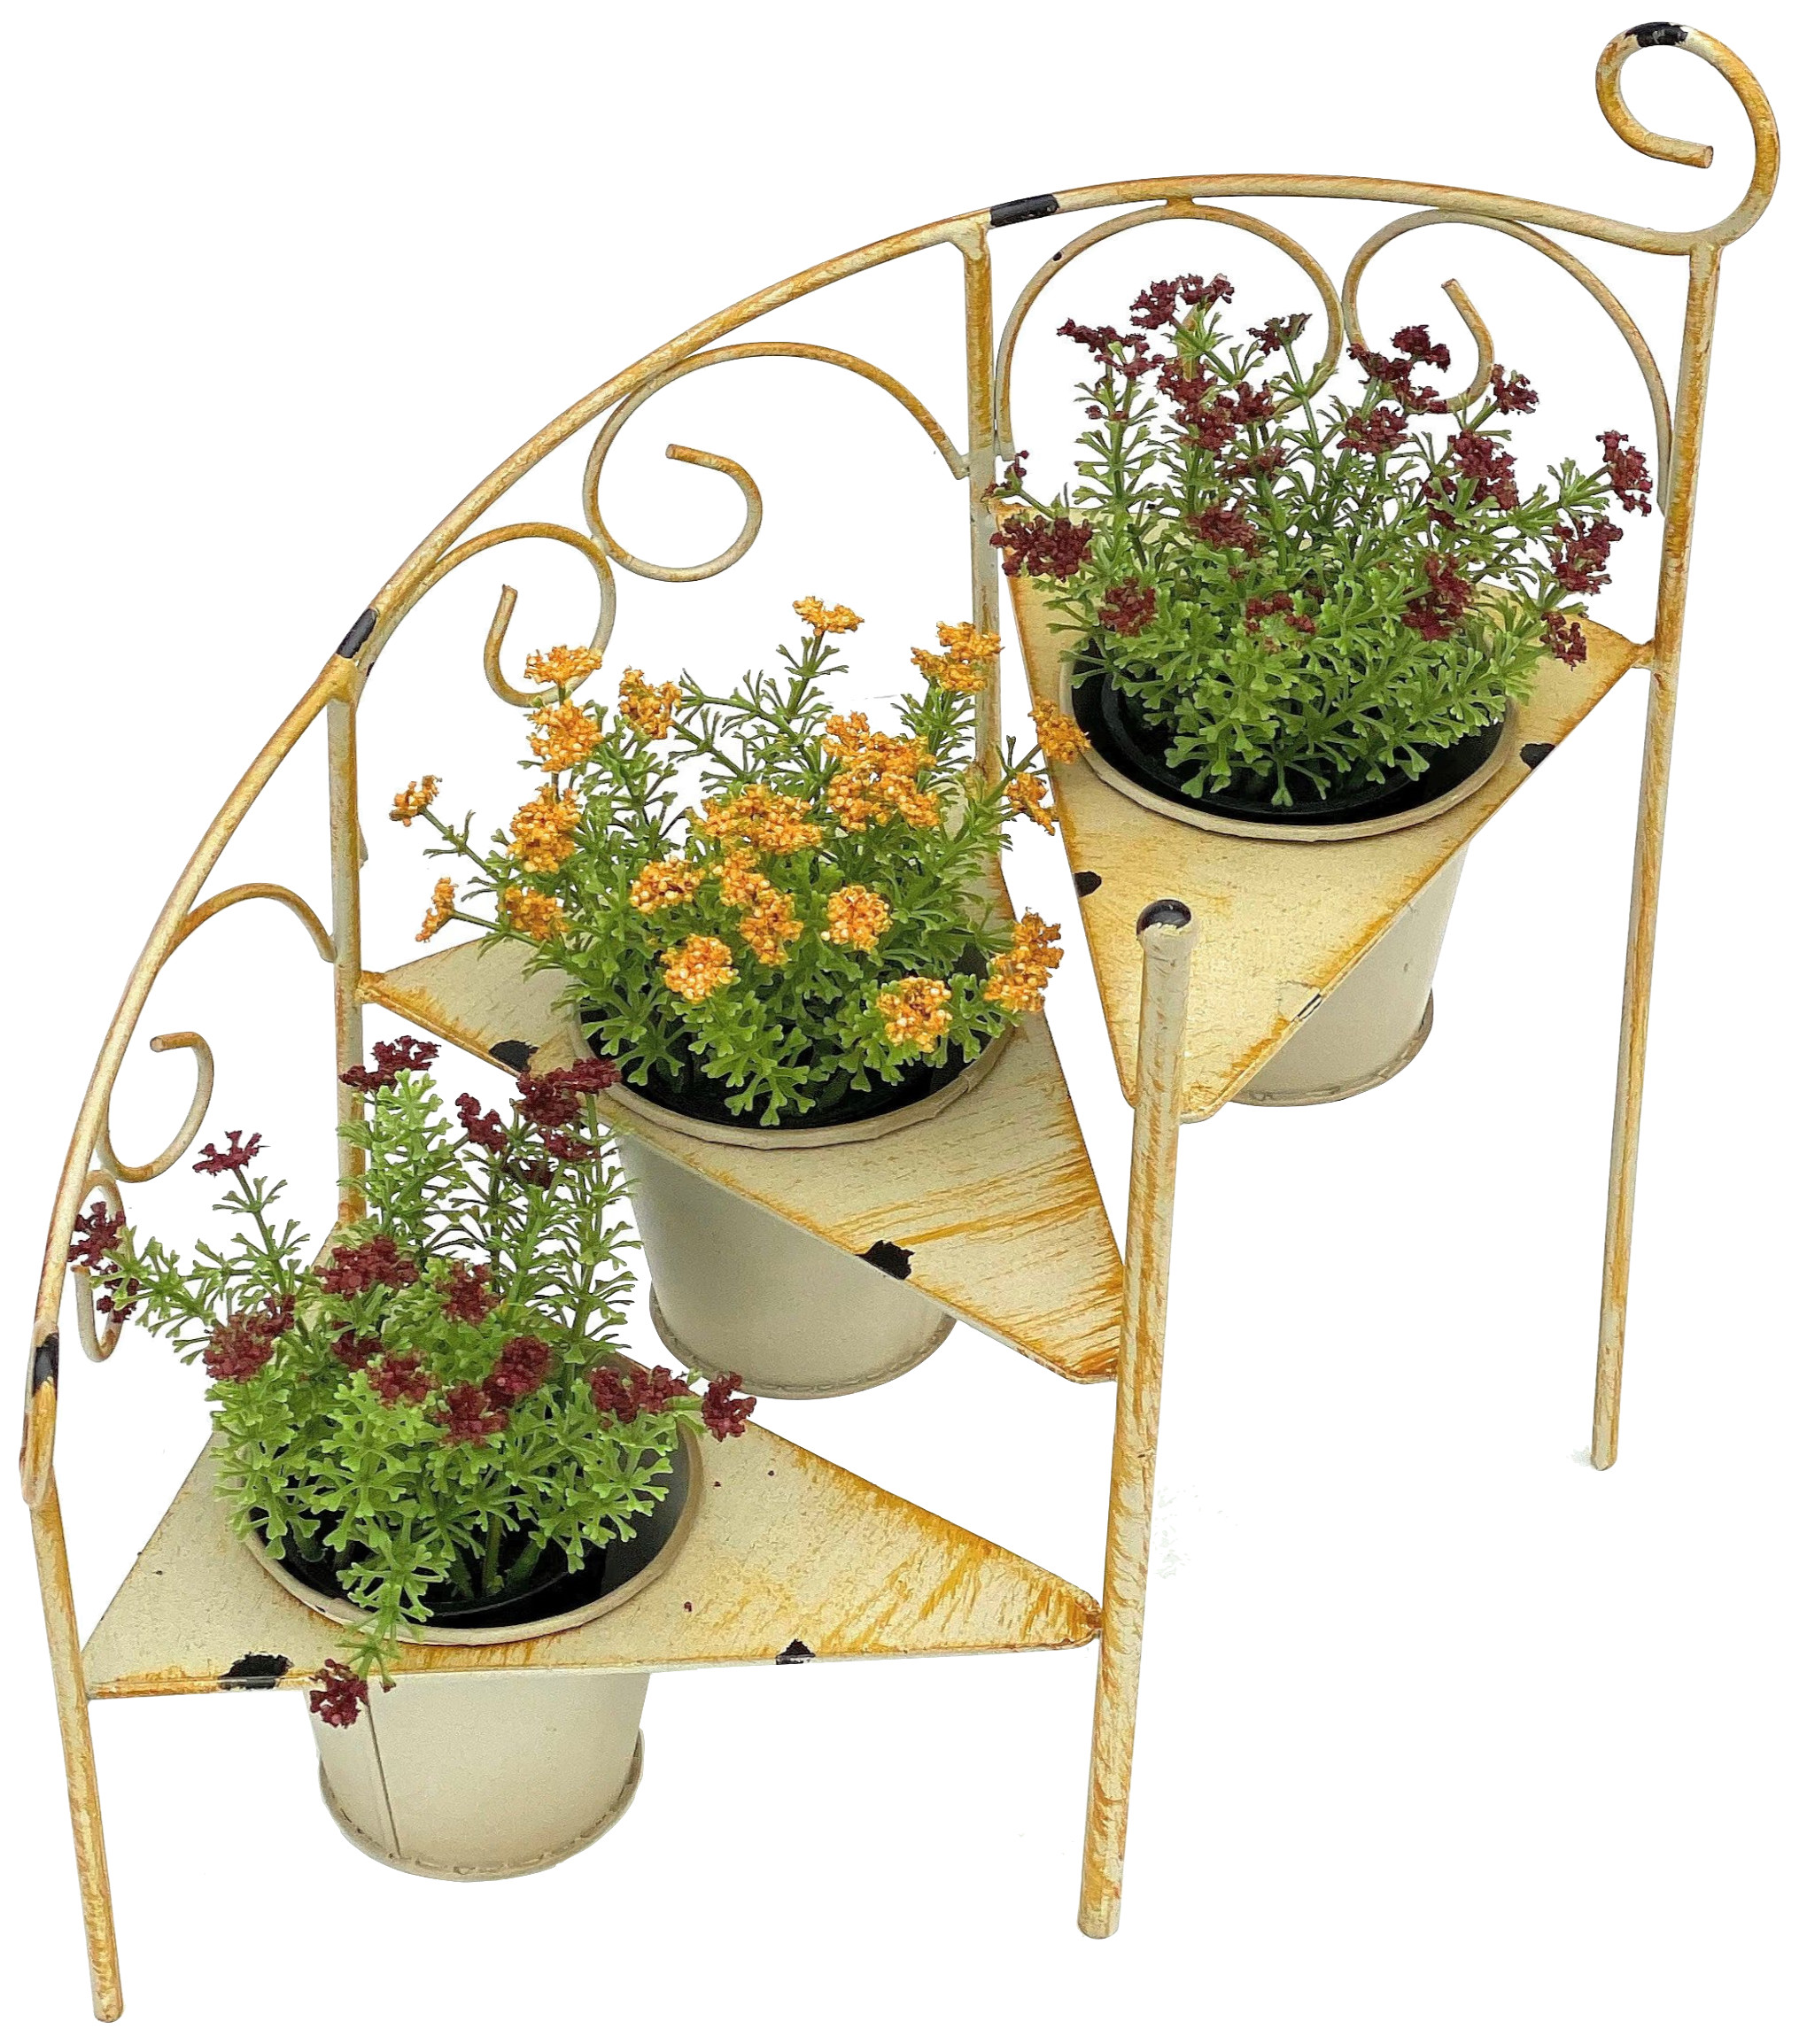 DanDiBo Blumentreppe Metall 38 cm Blumenständer mit 3 Töpfe 96098 Gelb  Shabby Chic Blumensäule Pflanzenständer Pflanzentreppe - DanDiBo-Ambiente